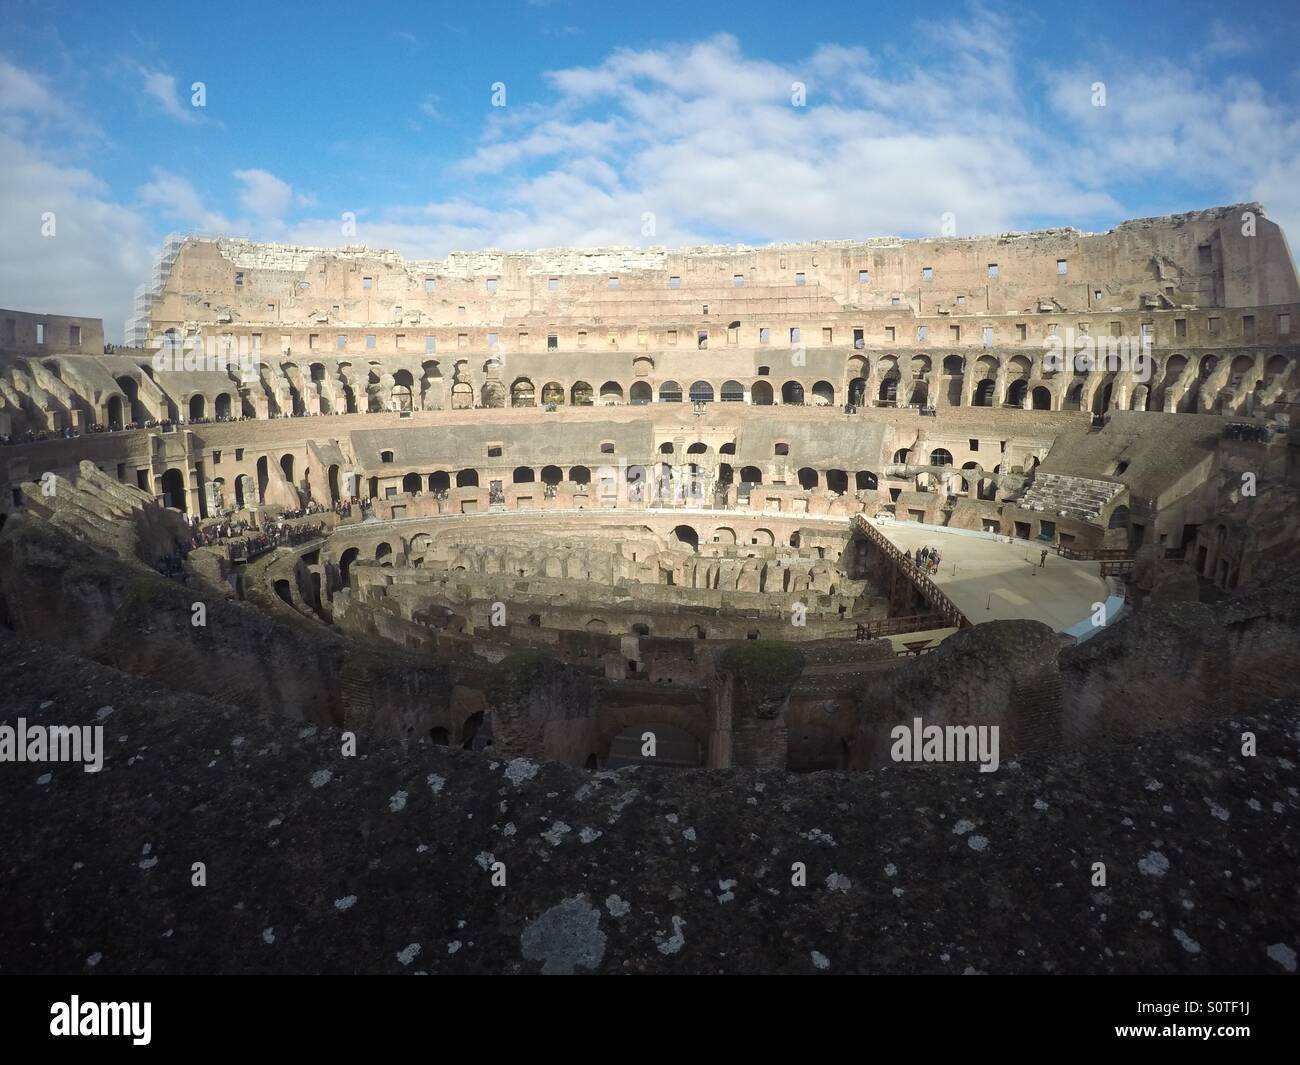 Inside the Roman  colloseum, Rome,Italy Stock Photo